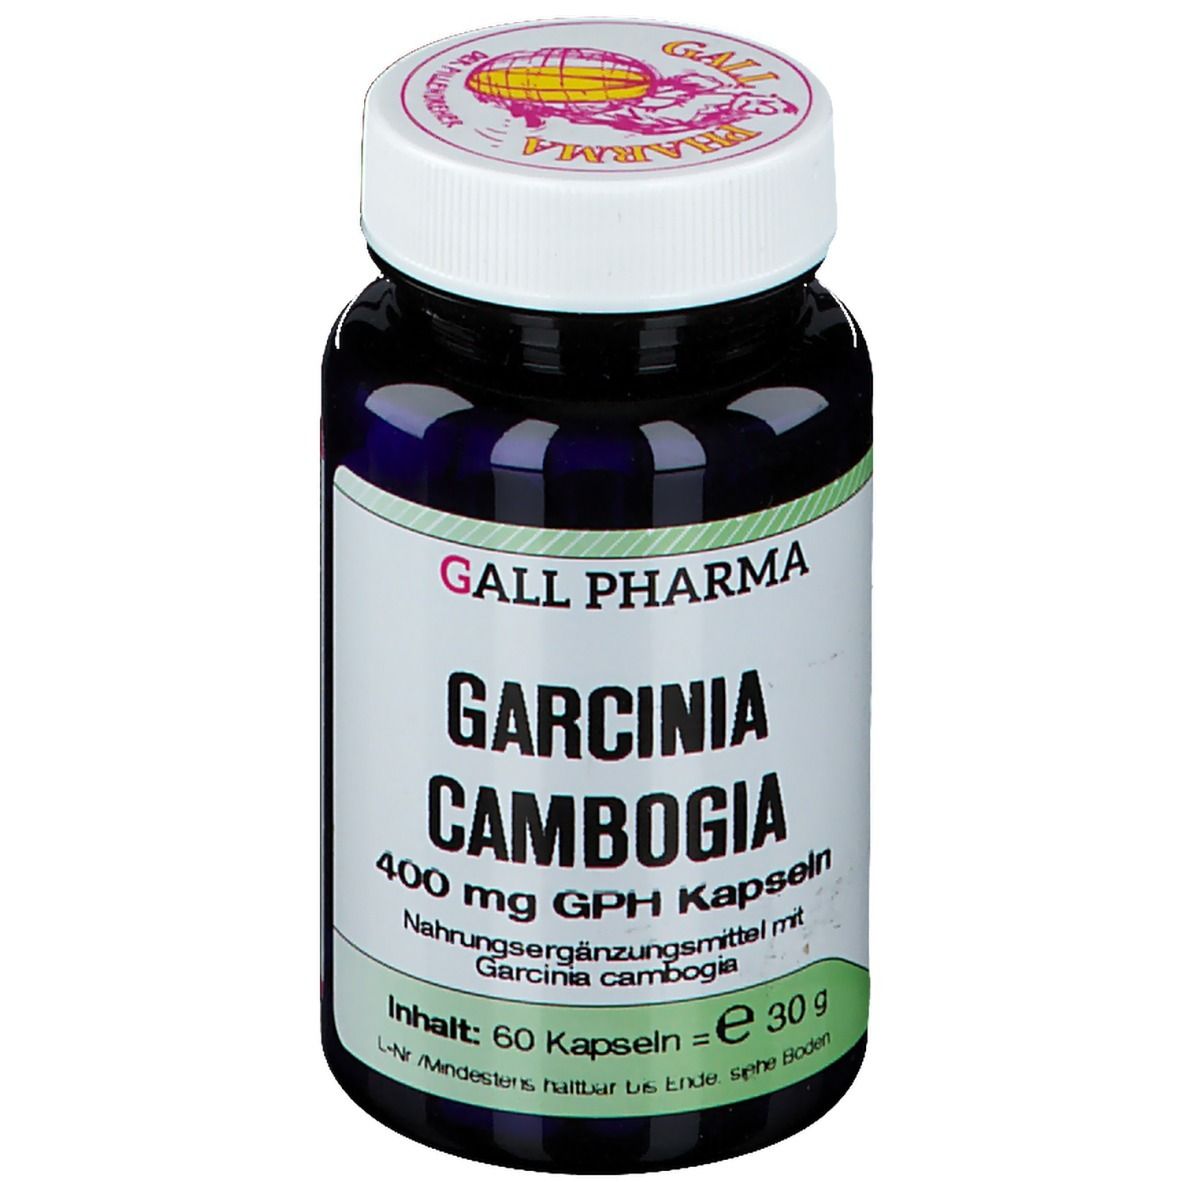 GALL PHARMA Garcinia Cambogia 400 mg GPH